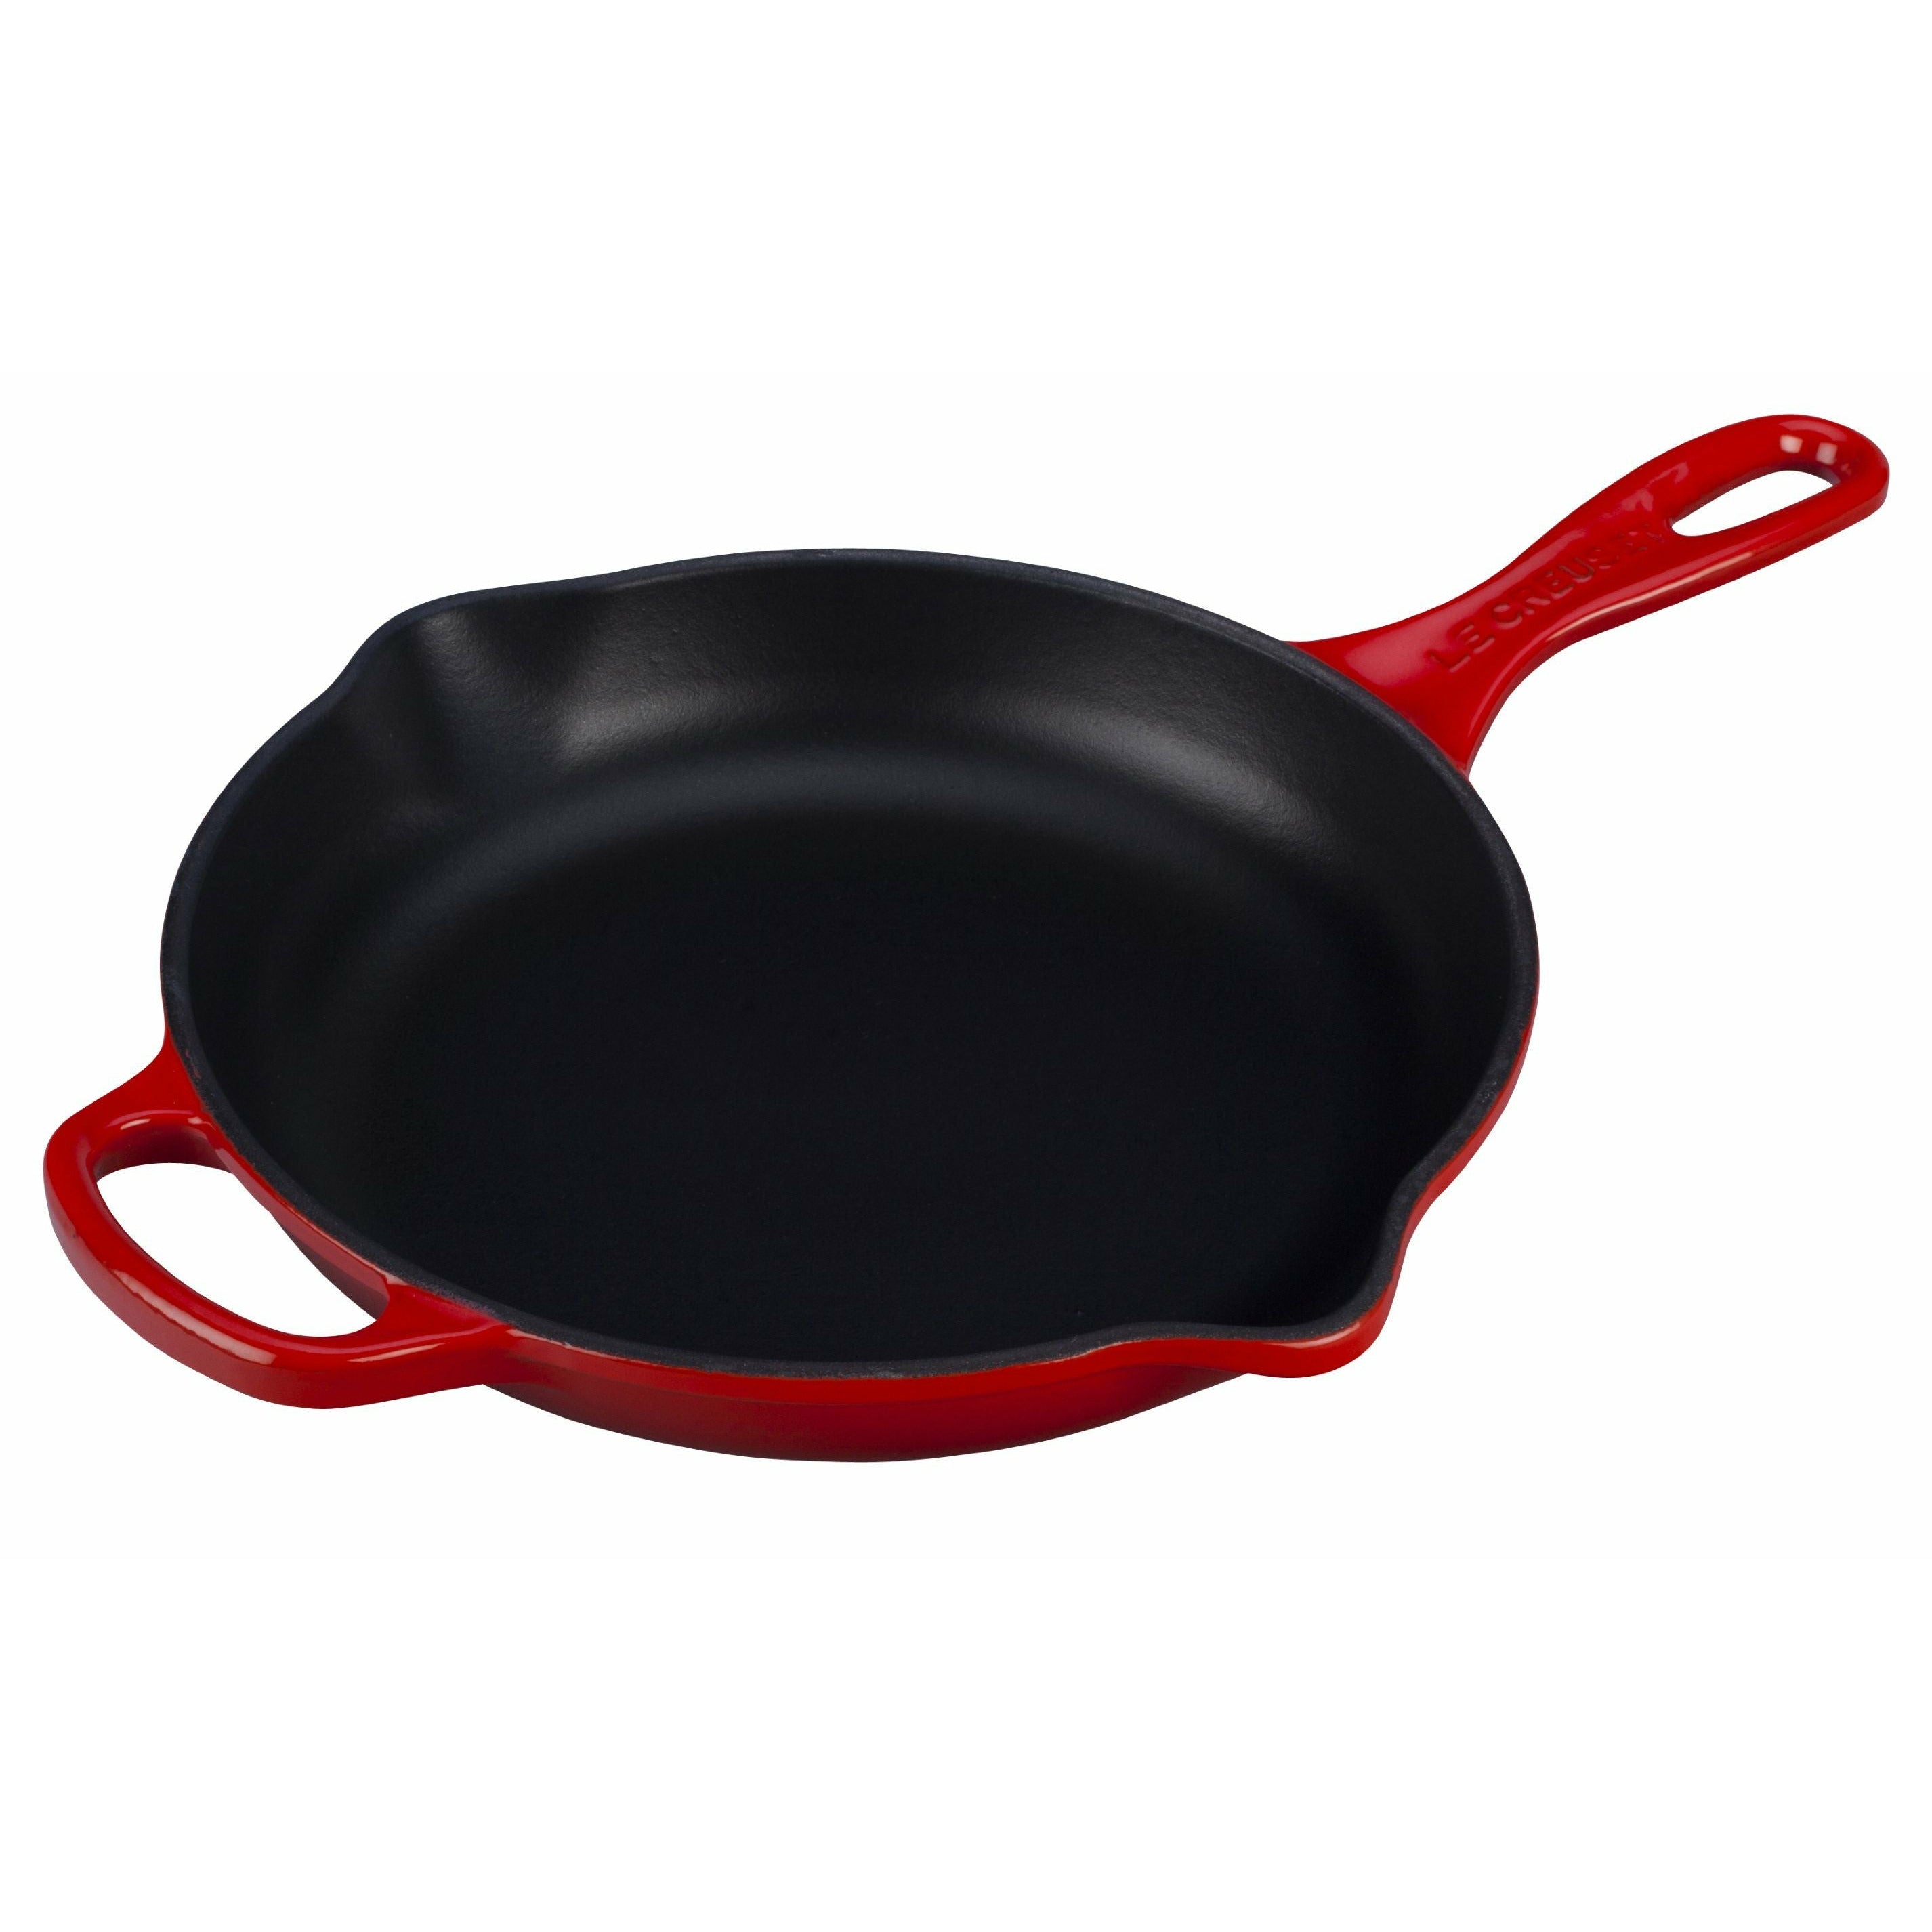 Le Creuset Signature Round Frying and Servant Pan 20 cm, cerise rouge